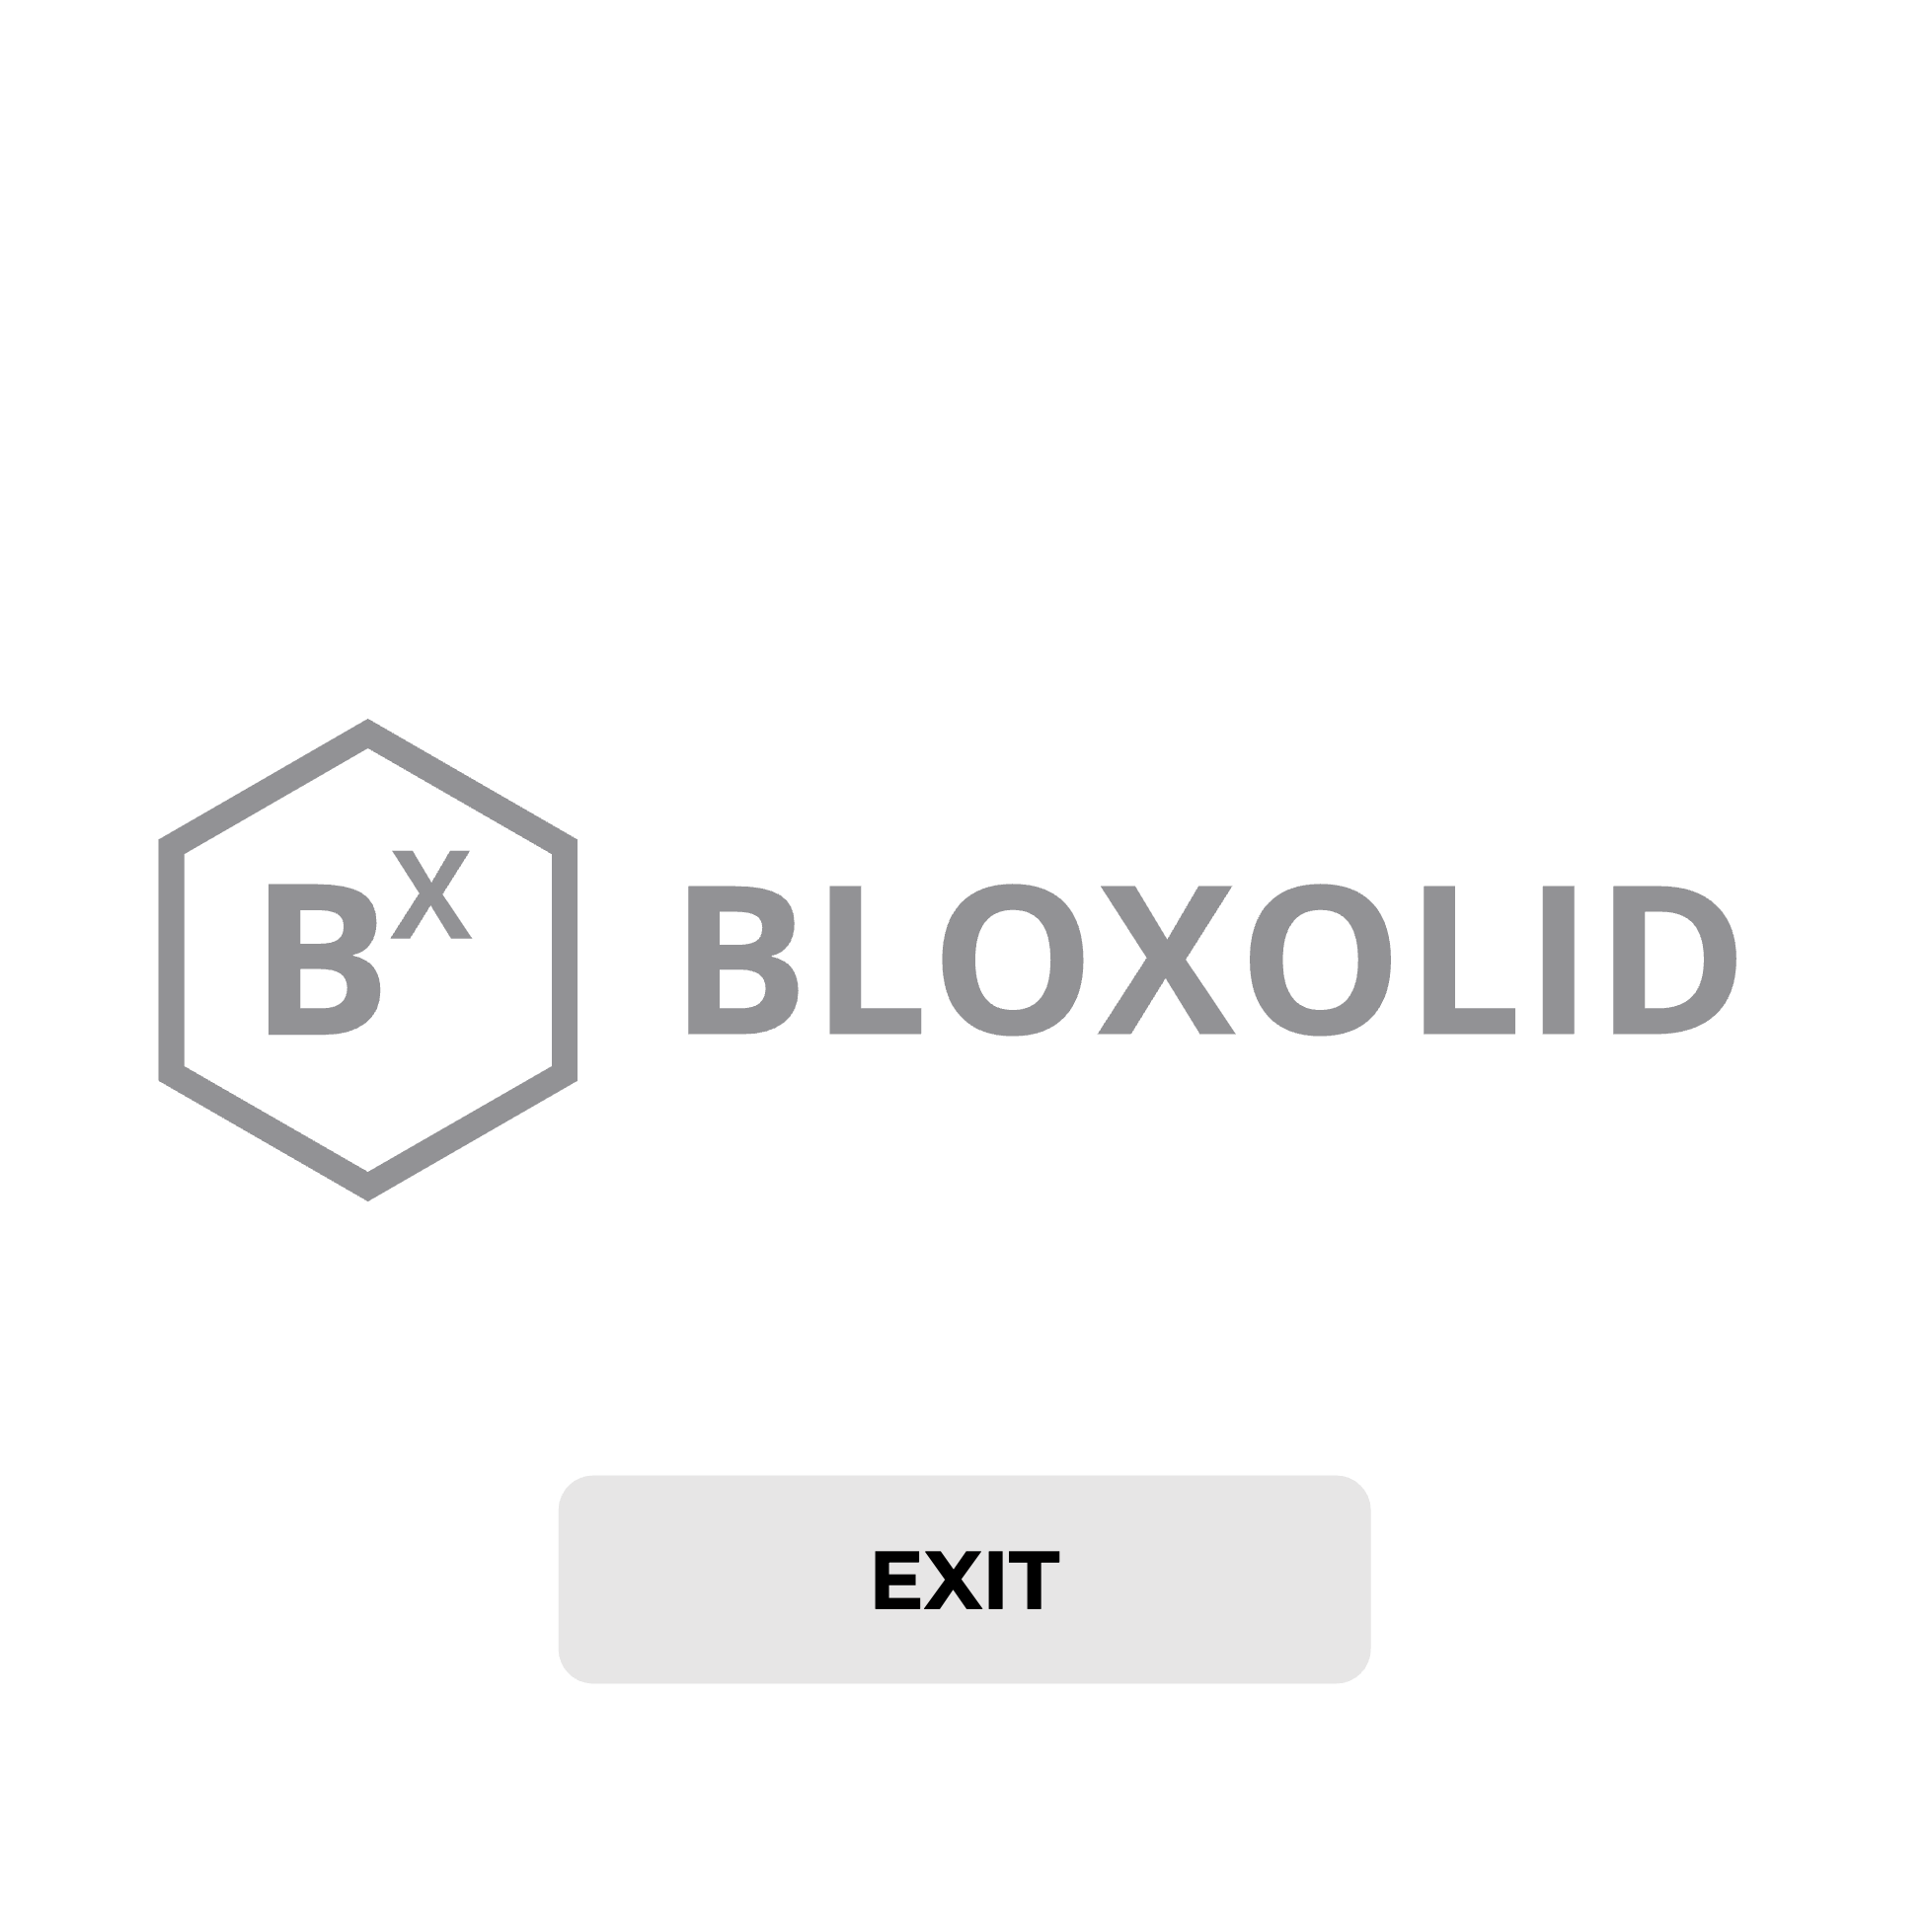 Bloxolid Logo Exit